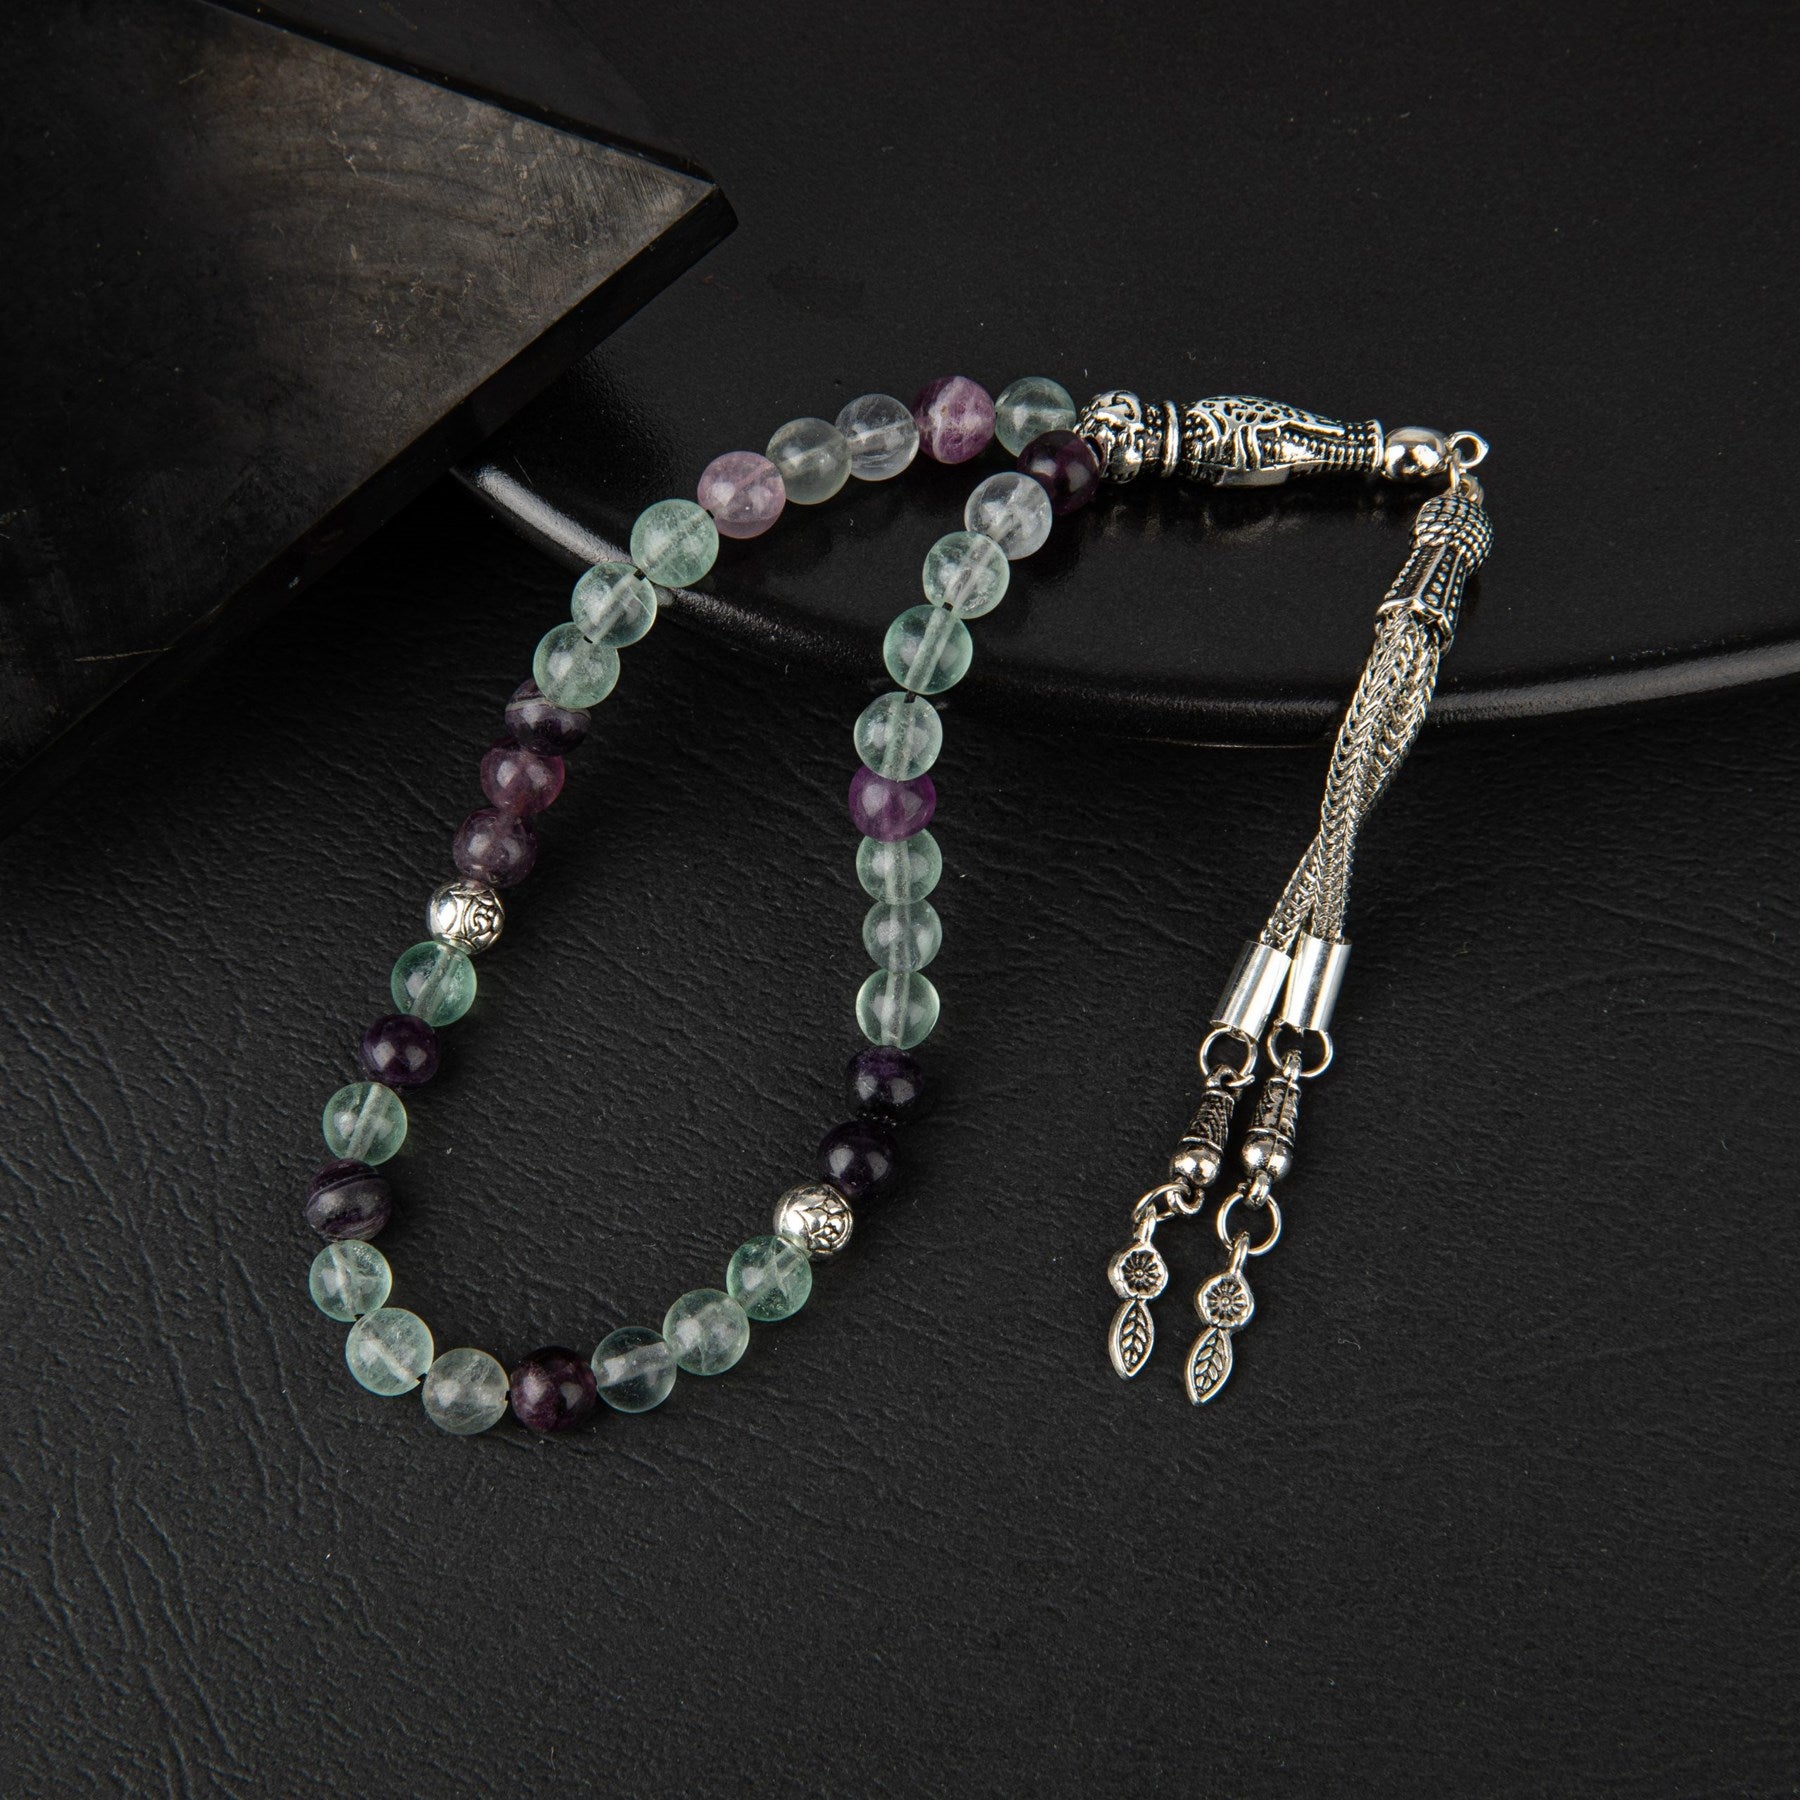 Flourite Gemstone Prayer Beads - 6mm / 33pc